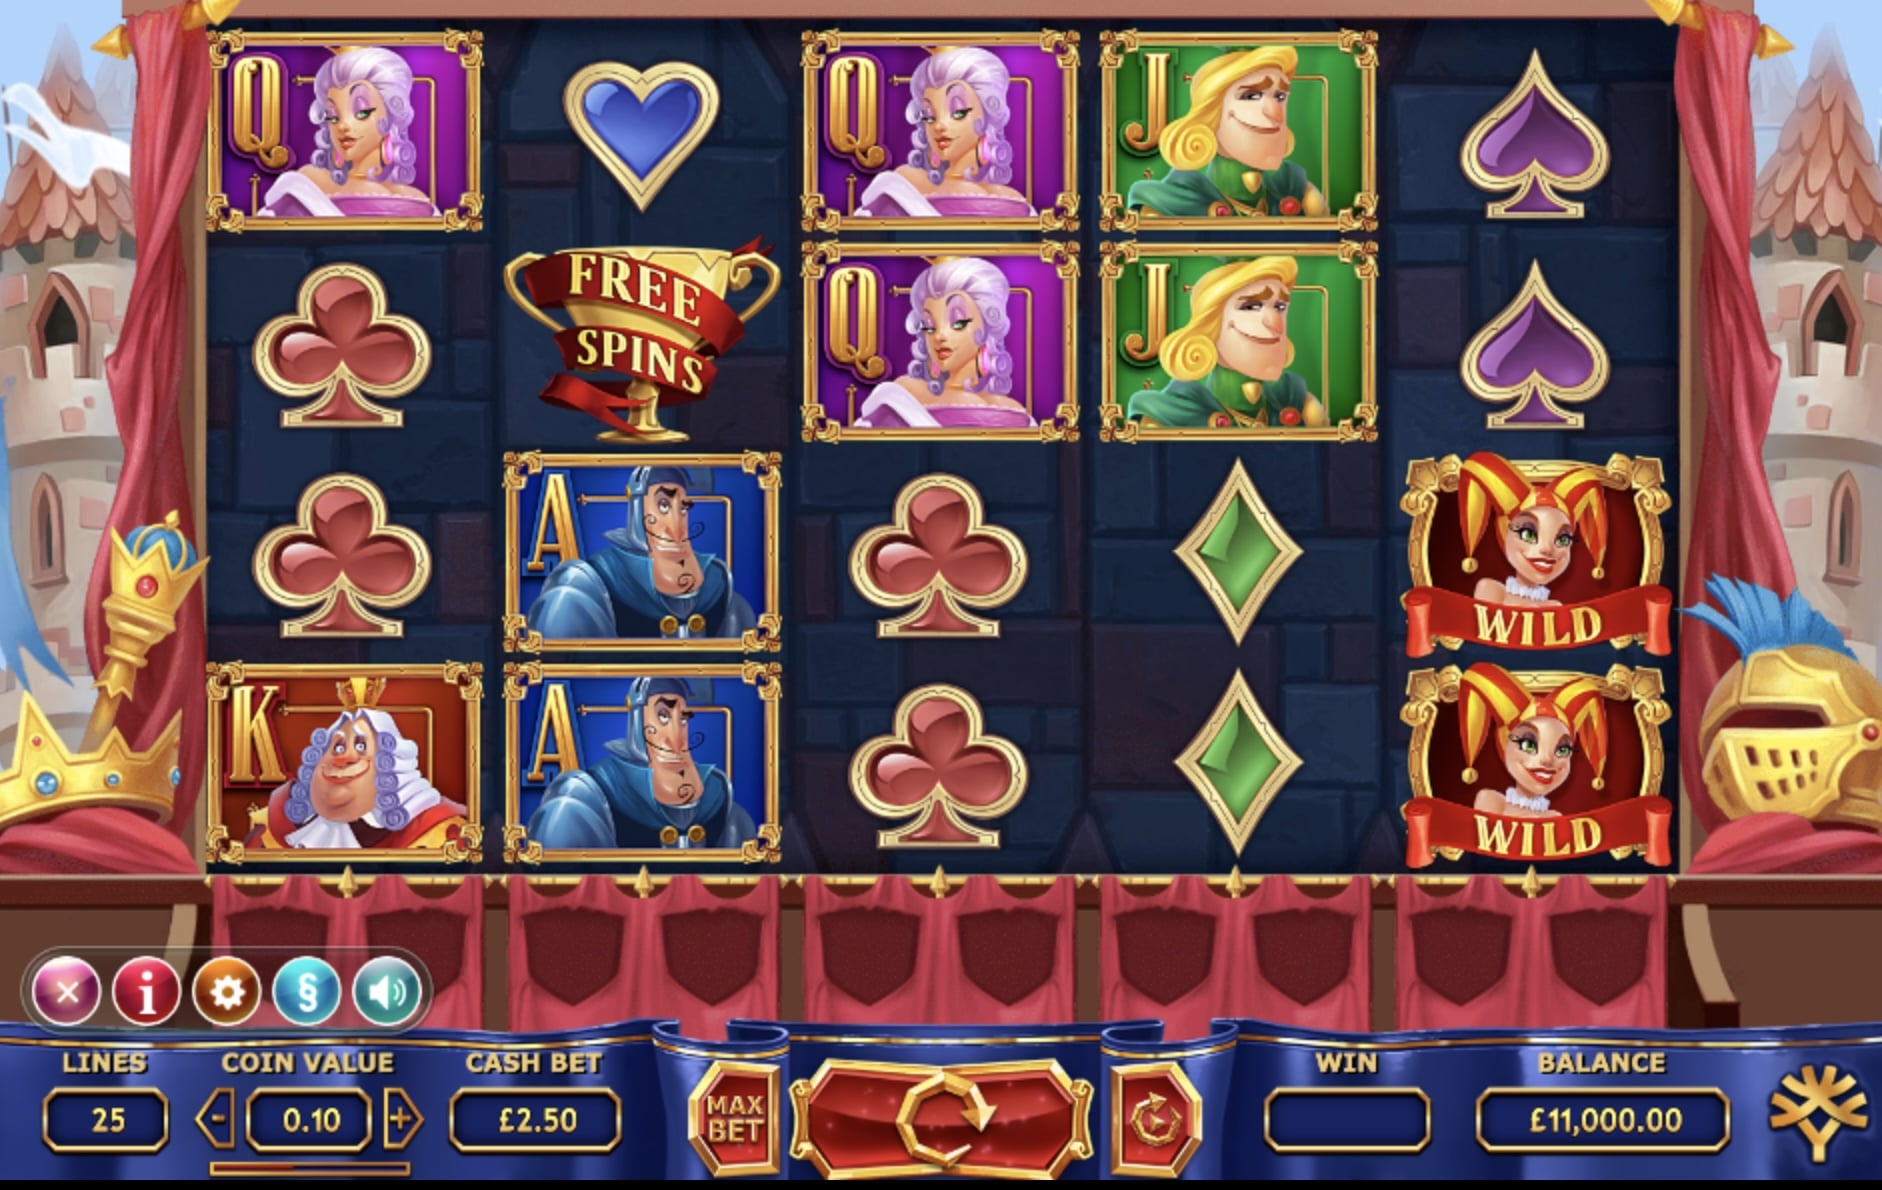 The Royal Family Slot Freeplay